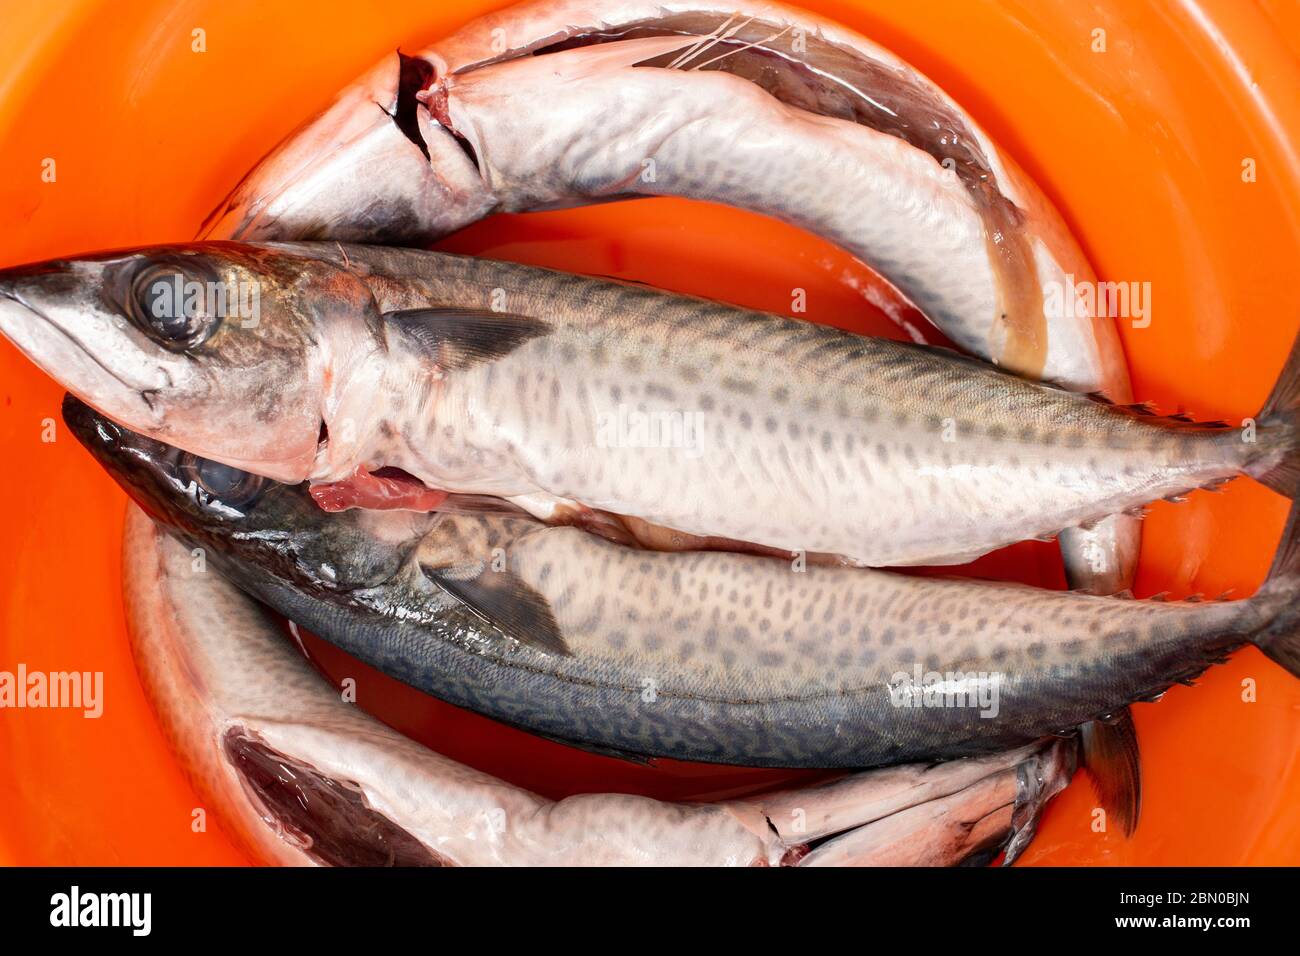 Atlantic chub mackerel arranged ready for cooking Stock Photo - Alamy